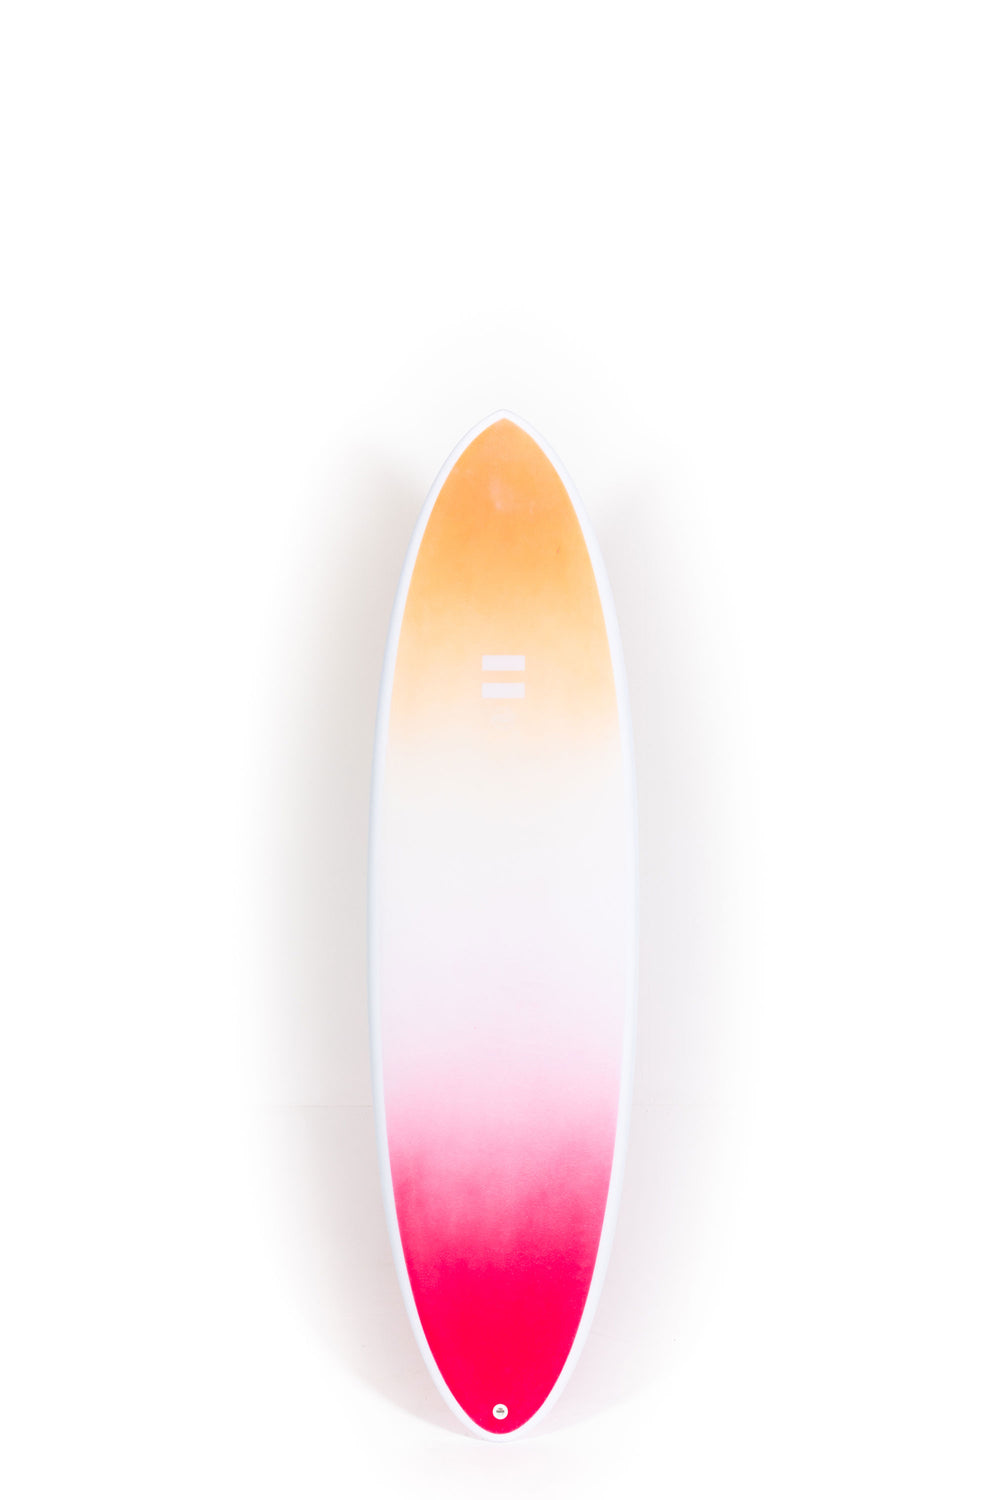 Pukas Surf Shop - Indio Surfboards - THE EGG Stripes - 6'8